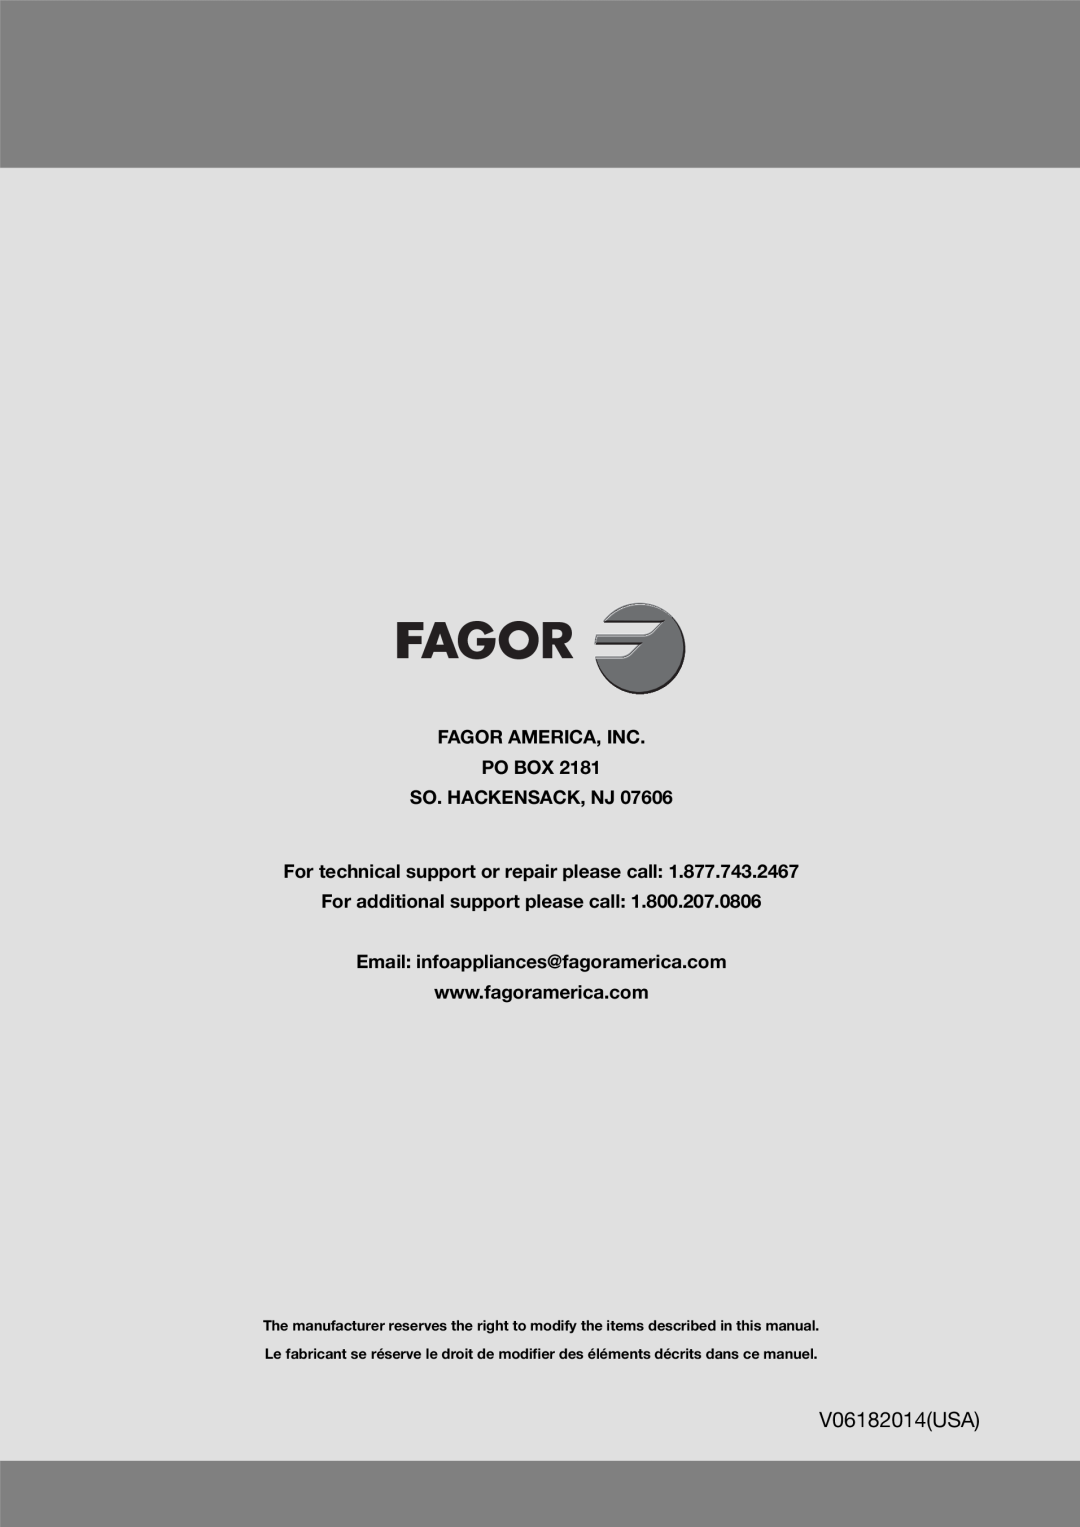 Fagor America BMF-200X manual Fagor America, Inc Po Box So. Hackensack, Nj, For technical support or repair please call 